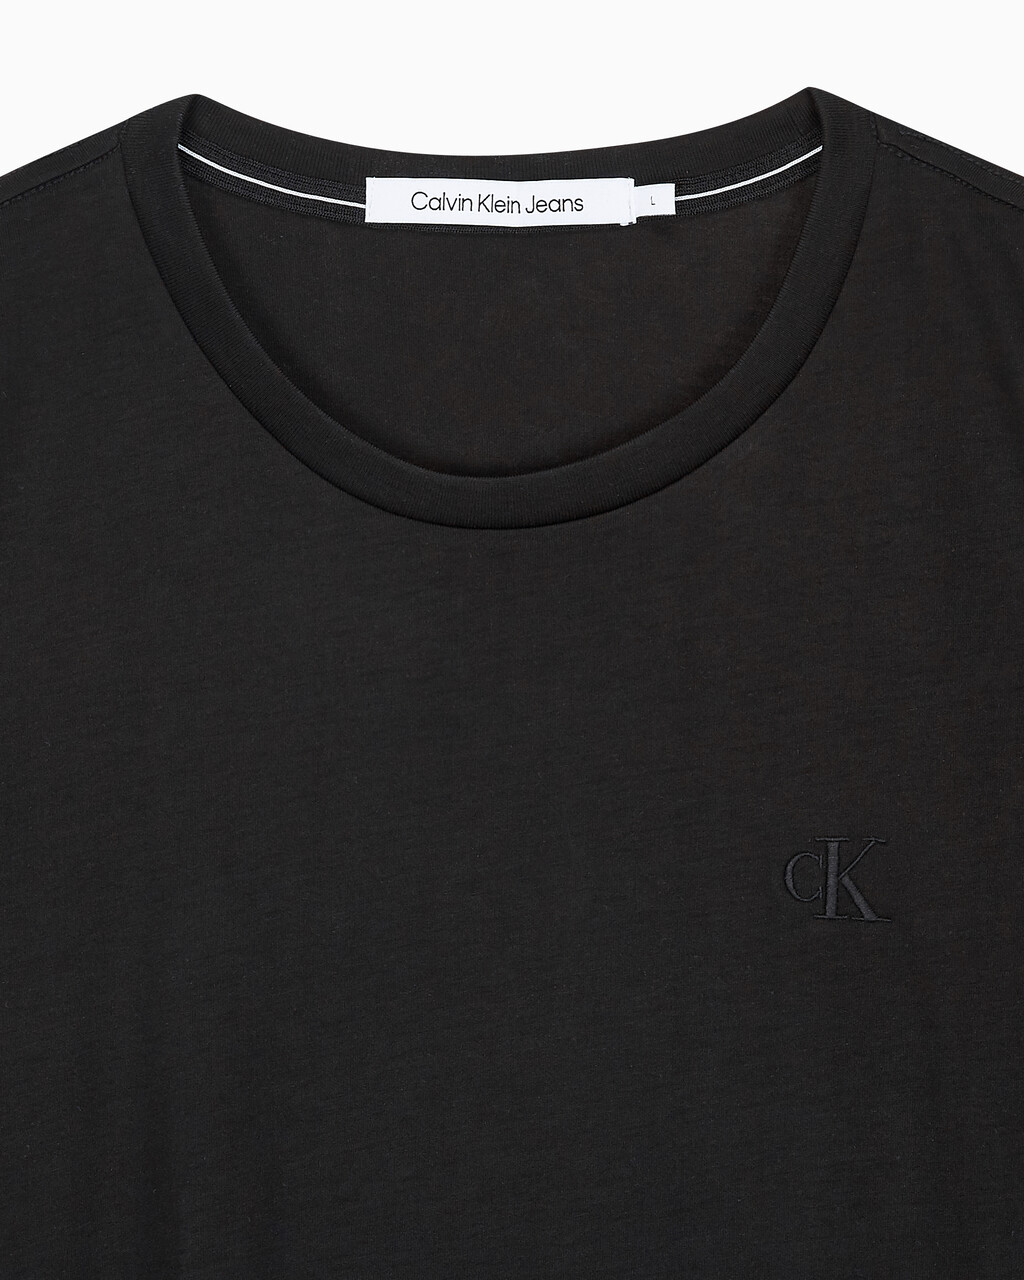 Buy 남성 레귤러핏 솔리드 CK 로고 반팔 티셔츠 in color CK BLACK